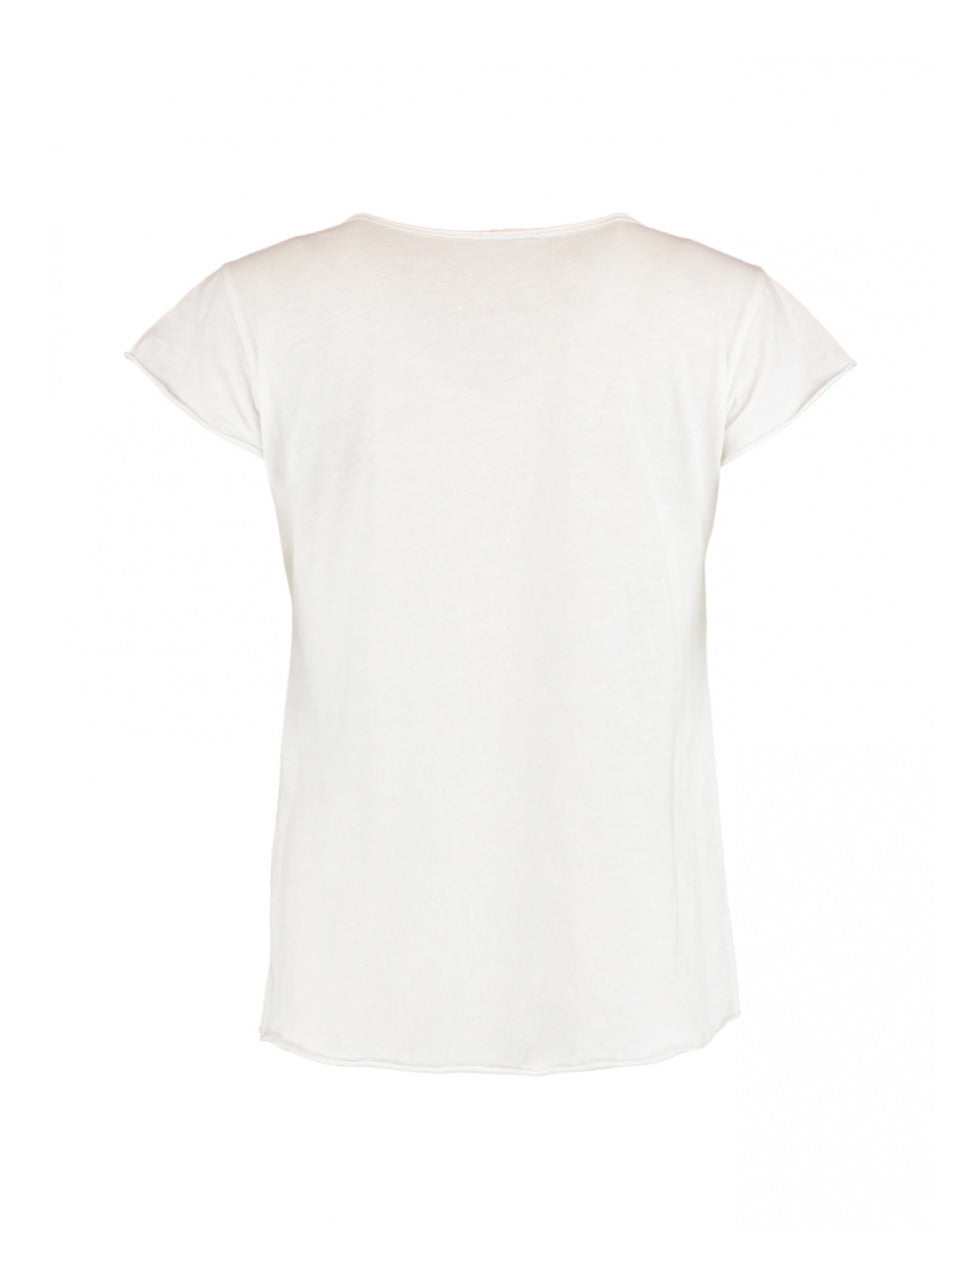 Svenja White Feather Print T-Shirt